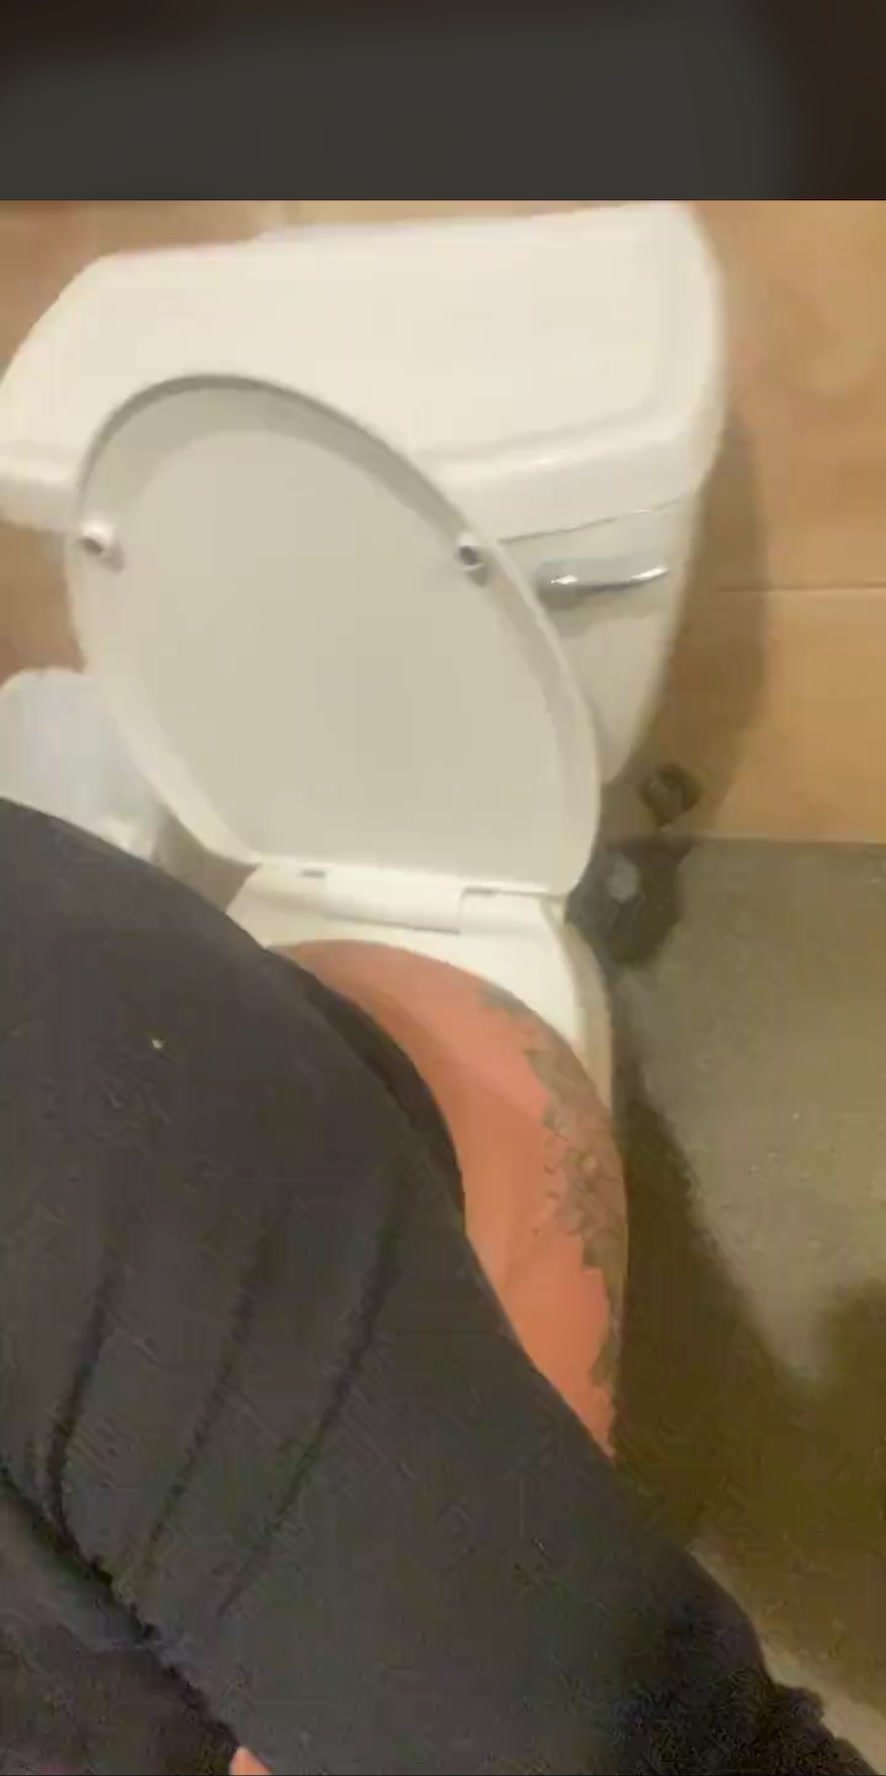 Public bathroom pee - video 4